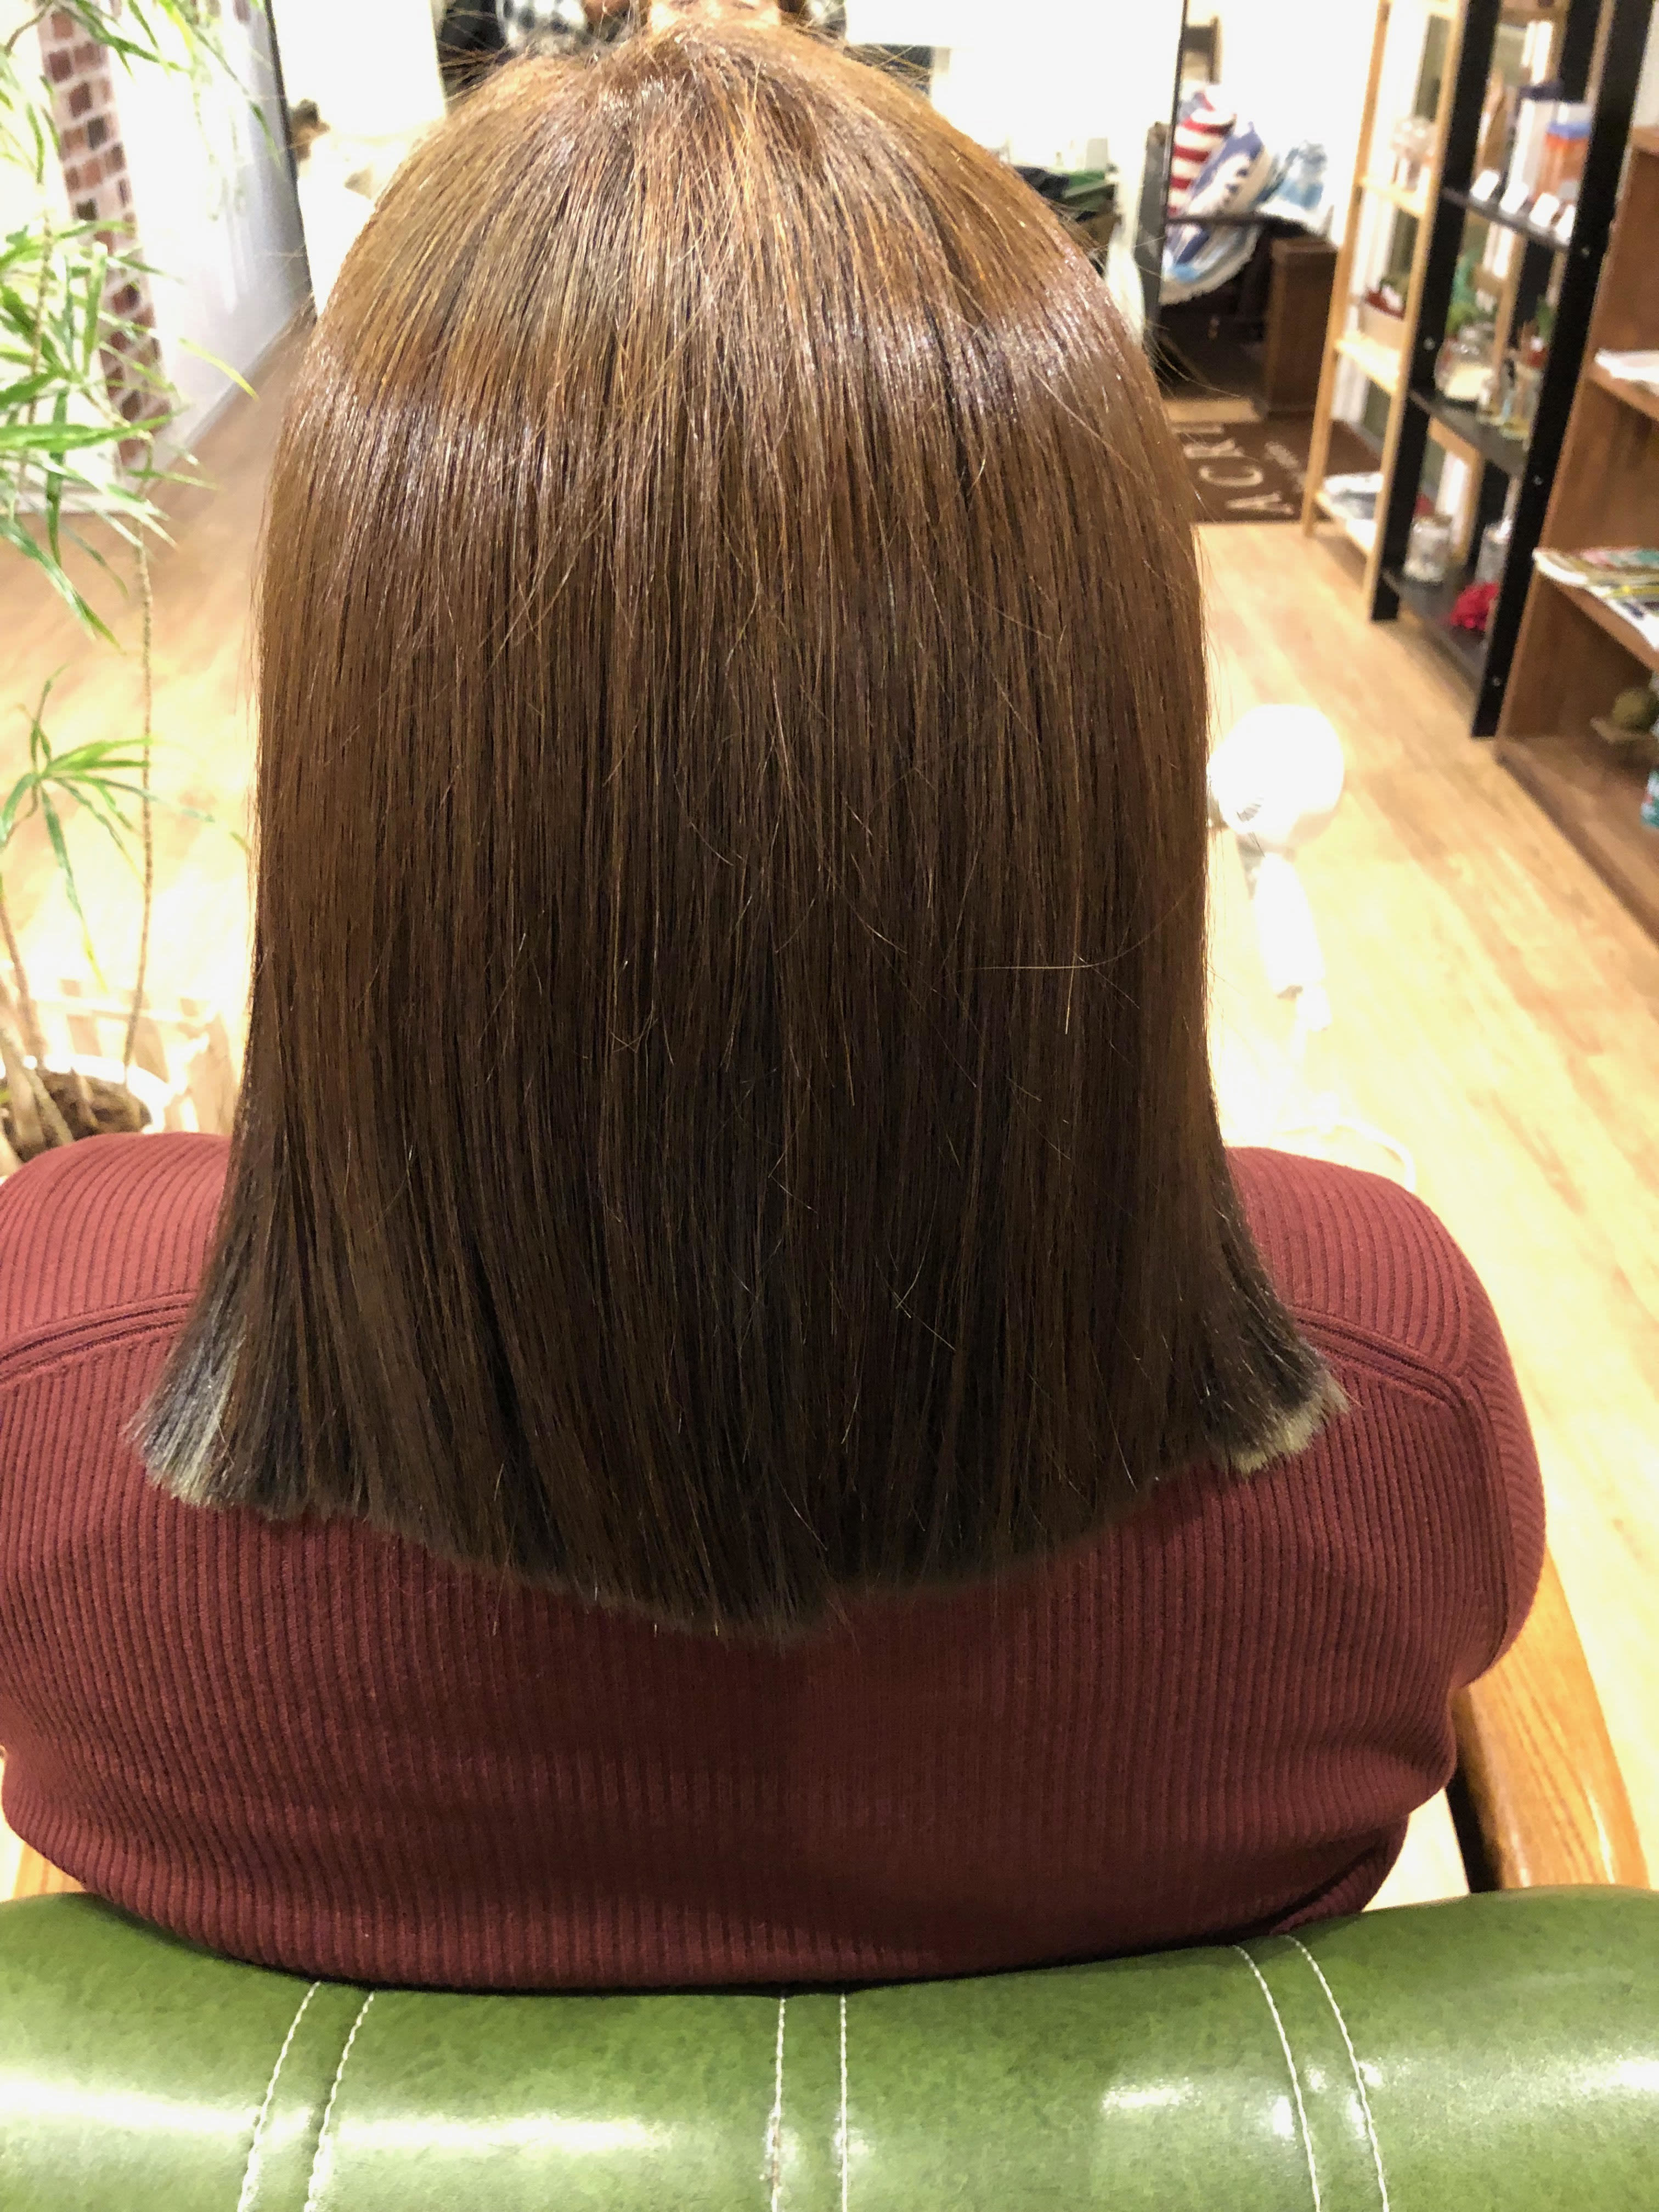 ACRI organic hair salon【アクリ オーガニック ヘアーサロン】のスタイル紹介。輝髪（キラガミ）ストリートメント